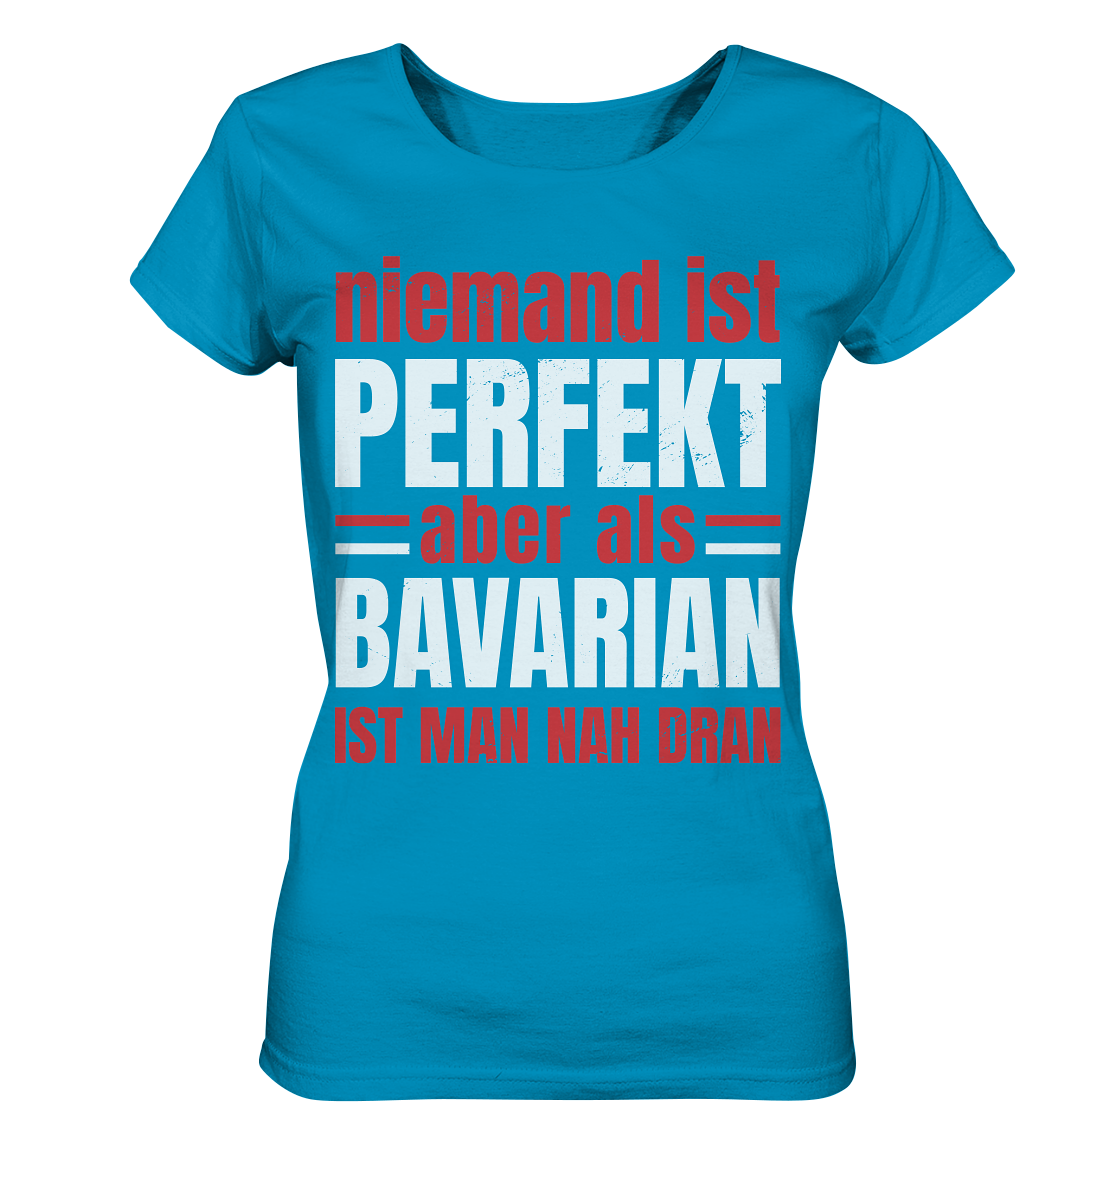 Niemand ist perfekt aber als Bavarian ist man nah dran - Ladies Organic Shirt